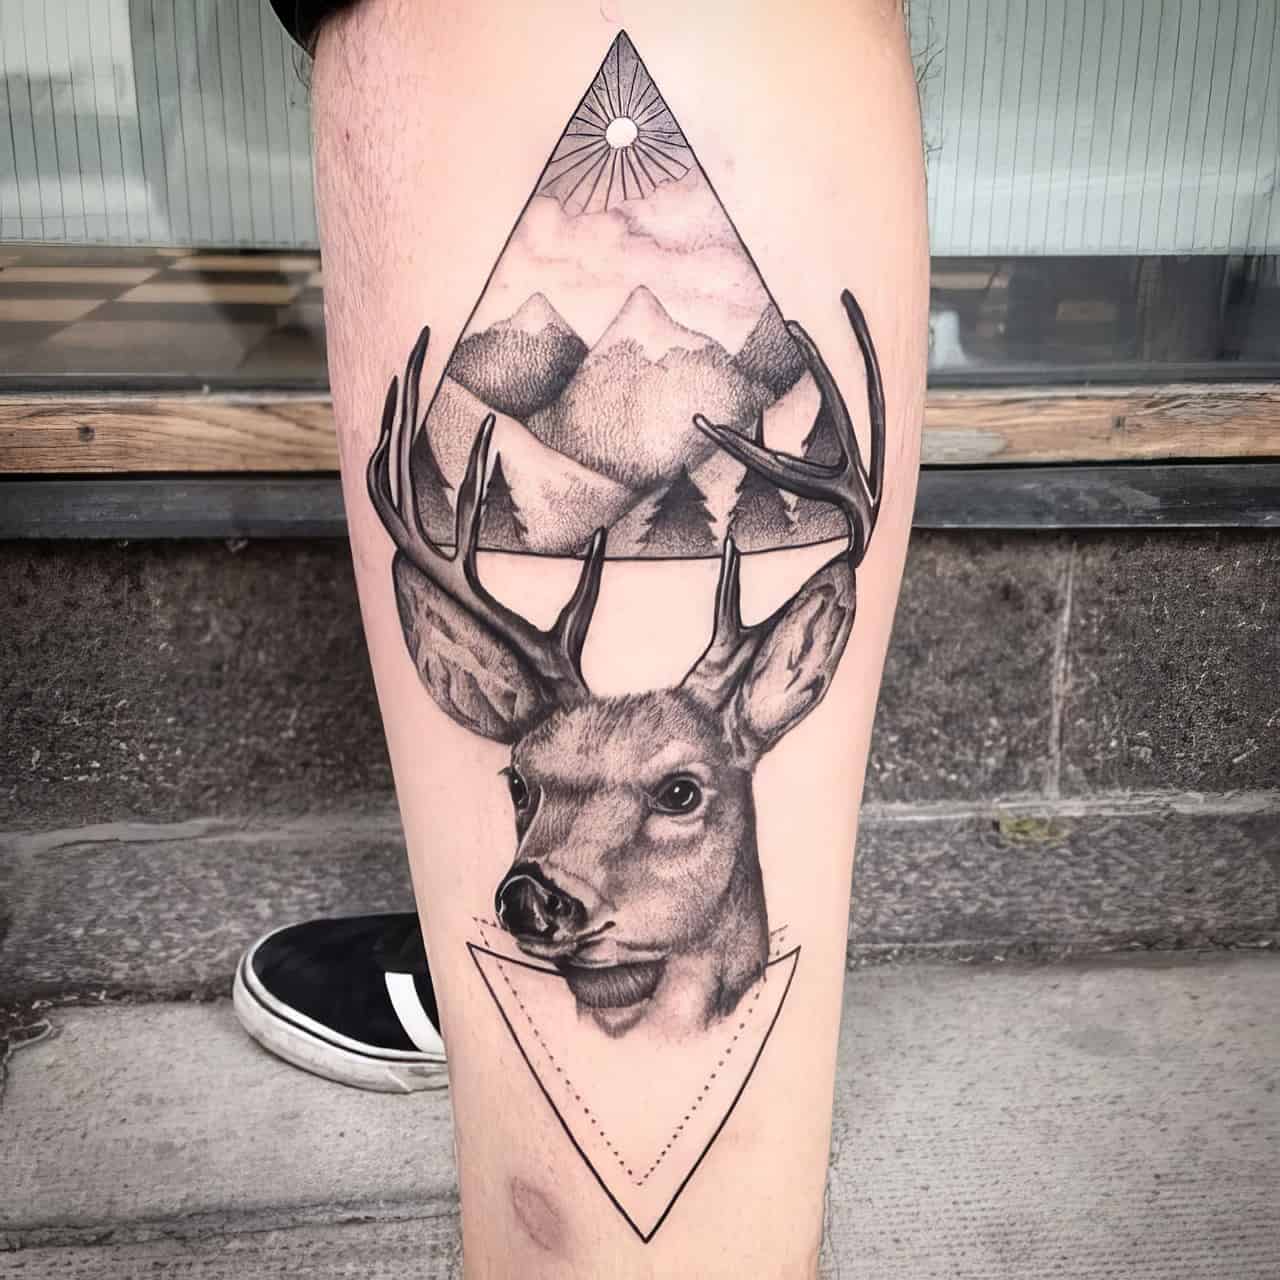 21+ Amazing Geometric Deer Tattoo Designs | PetPress | Deer tattoo designs, Deer  tattoo, Geometric deer